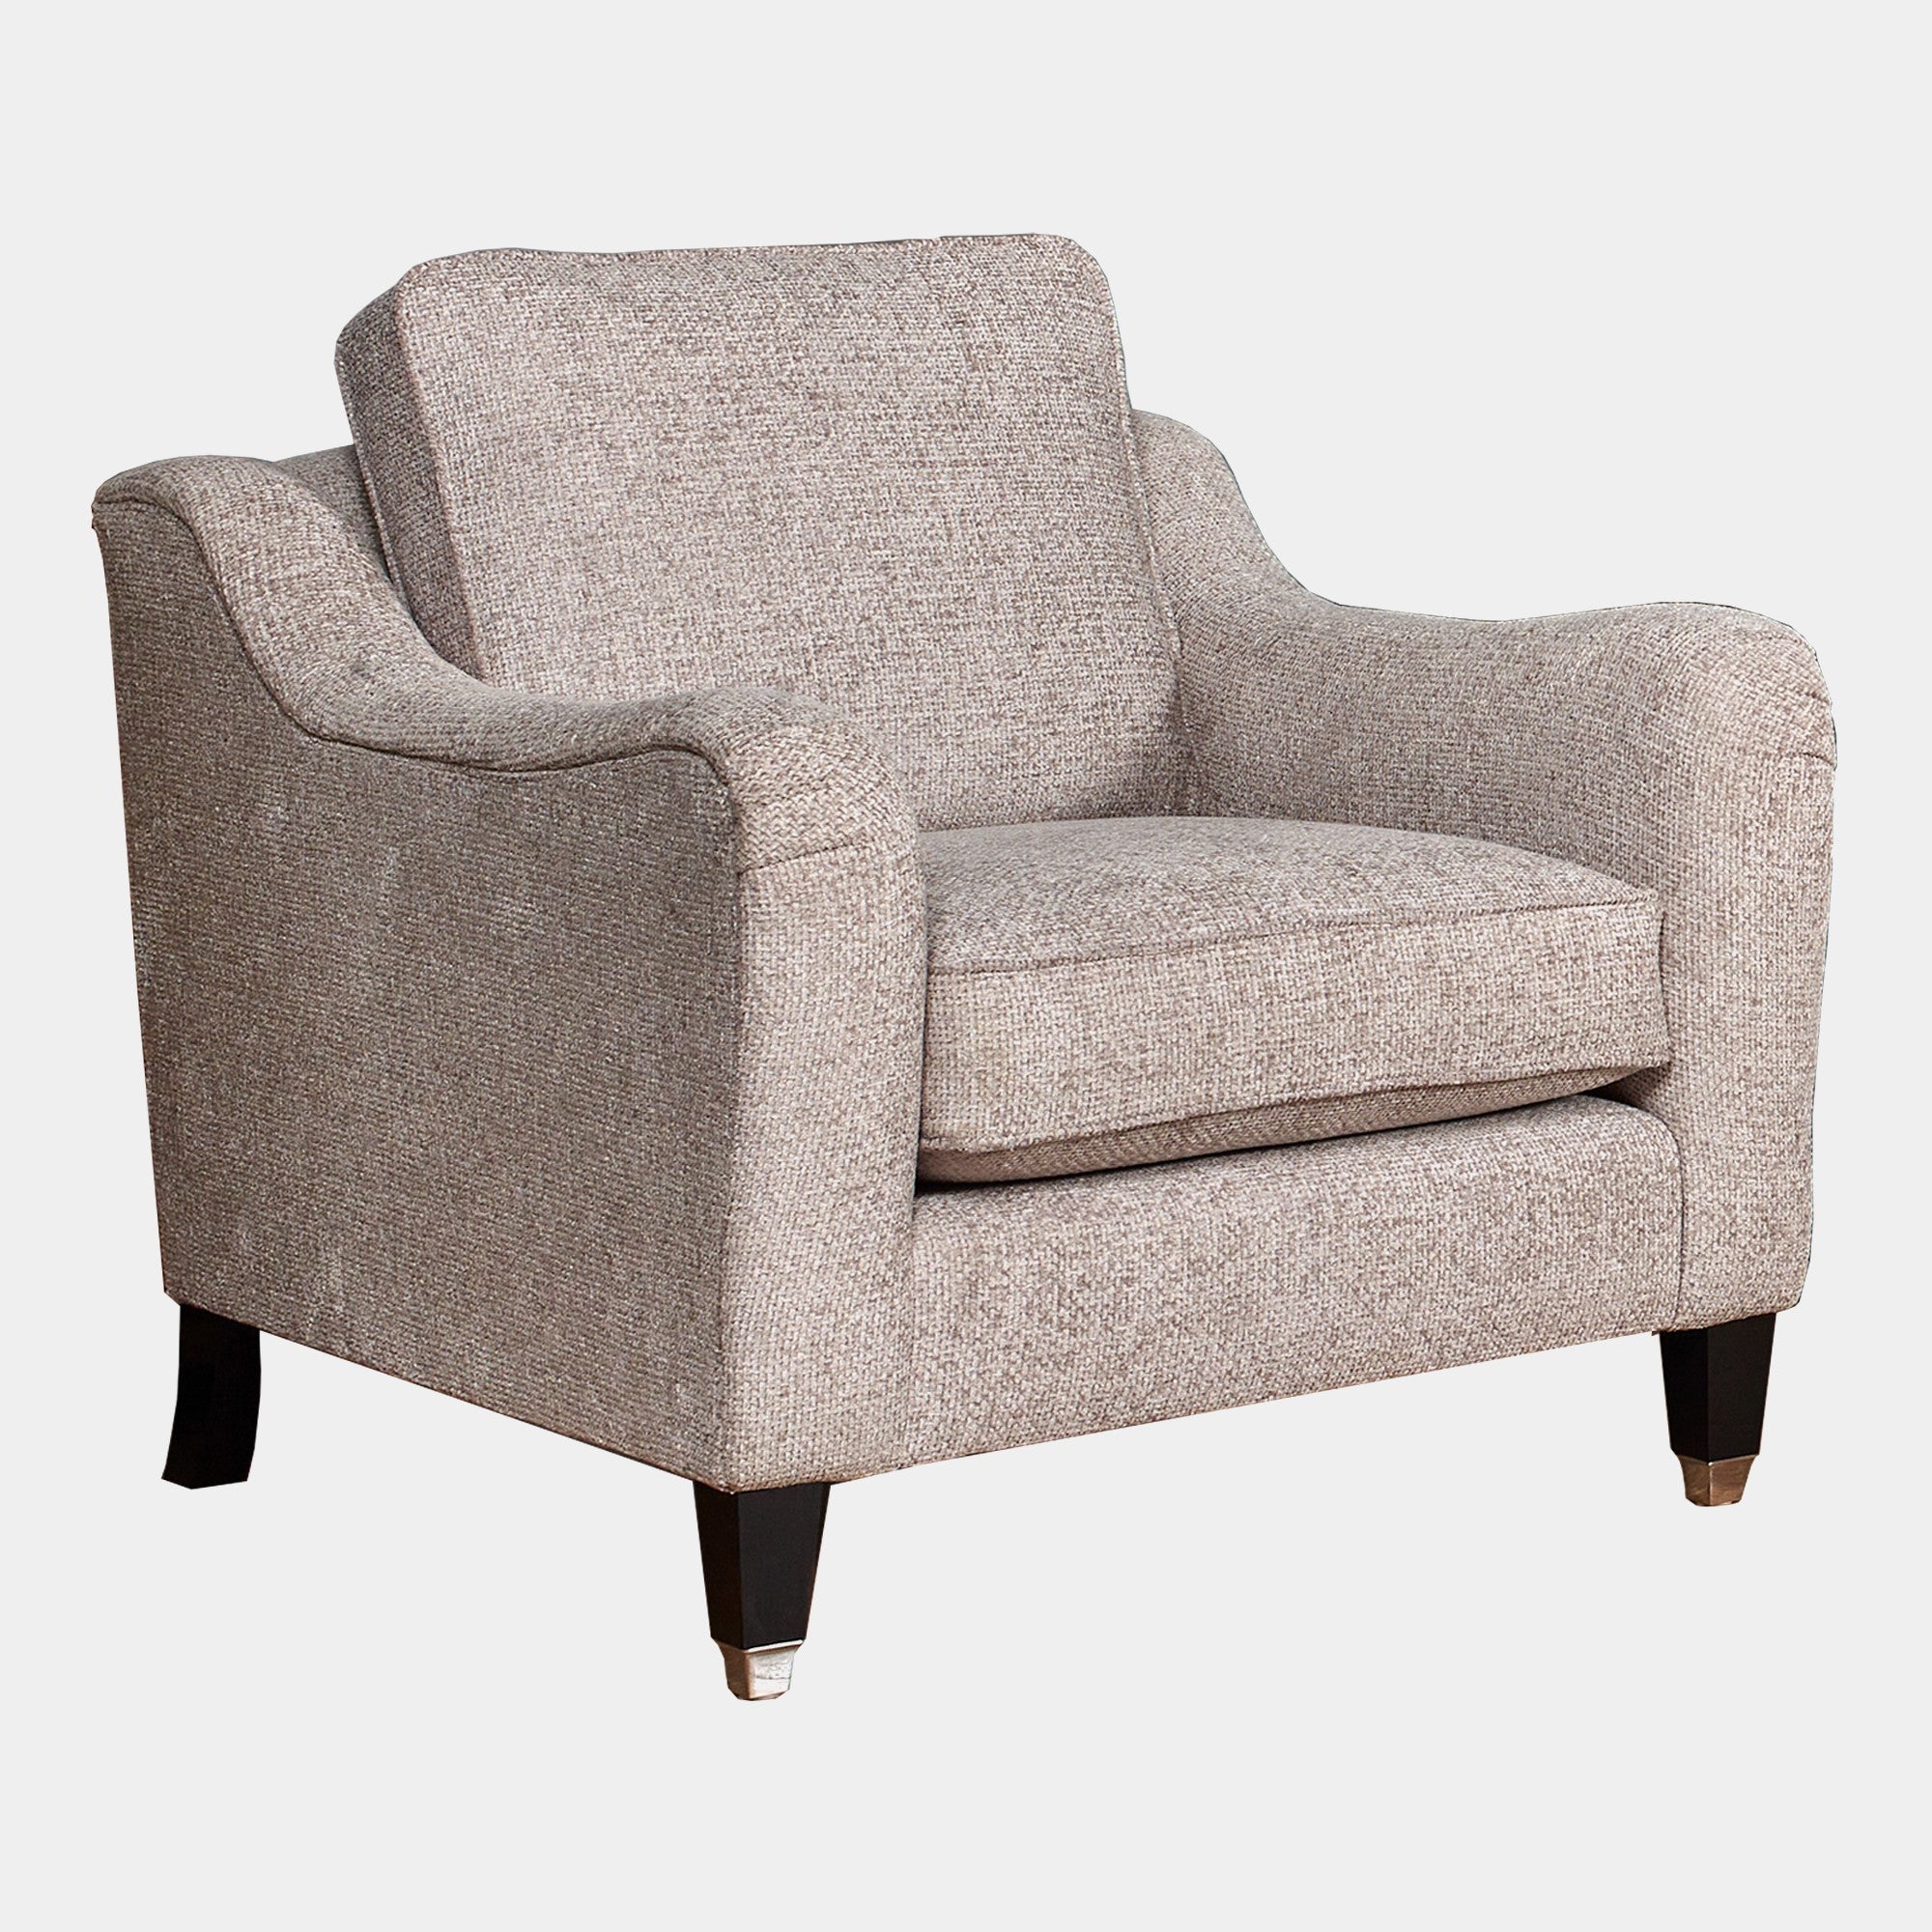 Burnham - Grand Chair In Fabric